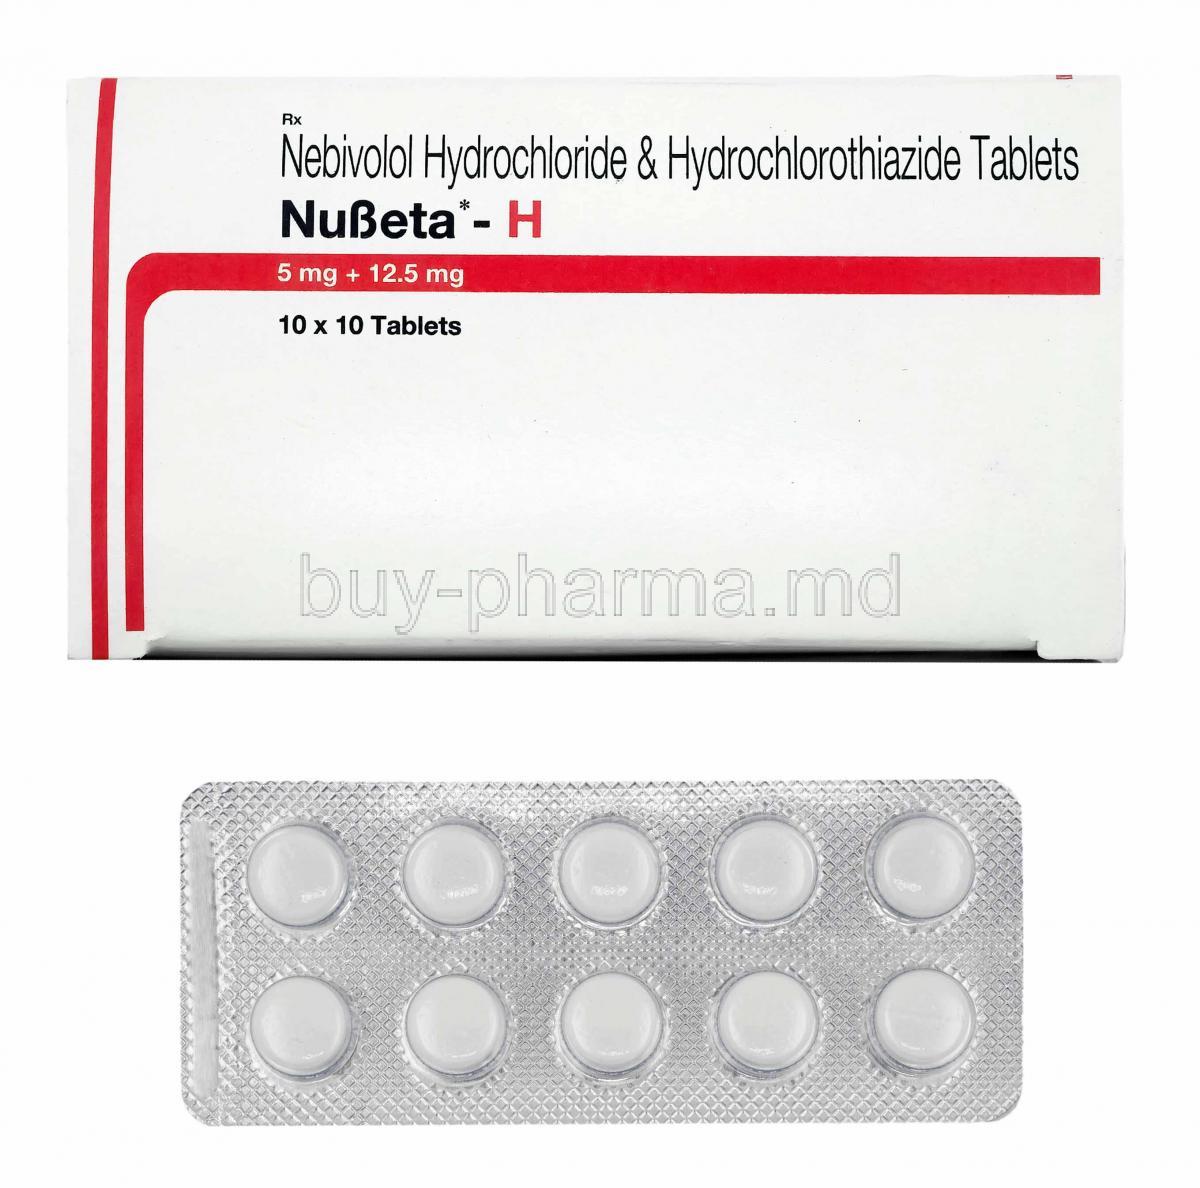 Nubeta-H, Nebivolol and Hydrochlorothiazide box and tablets